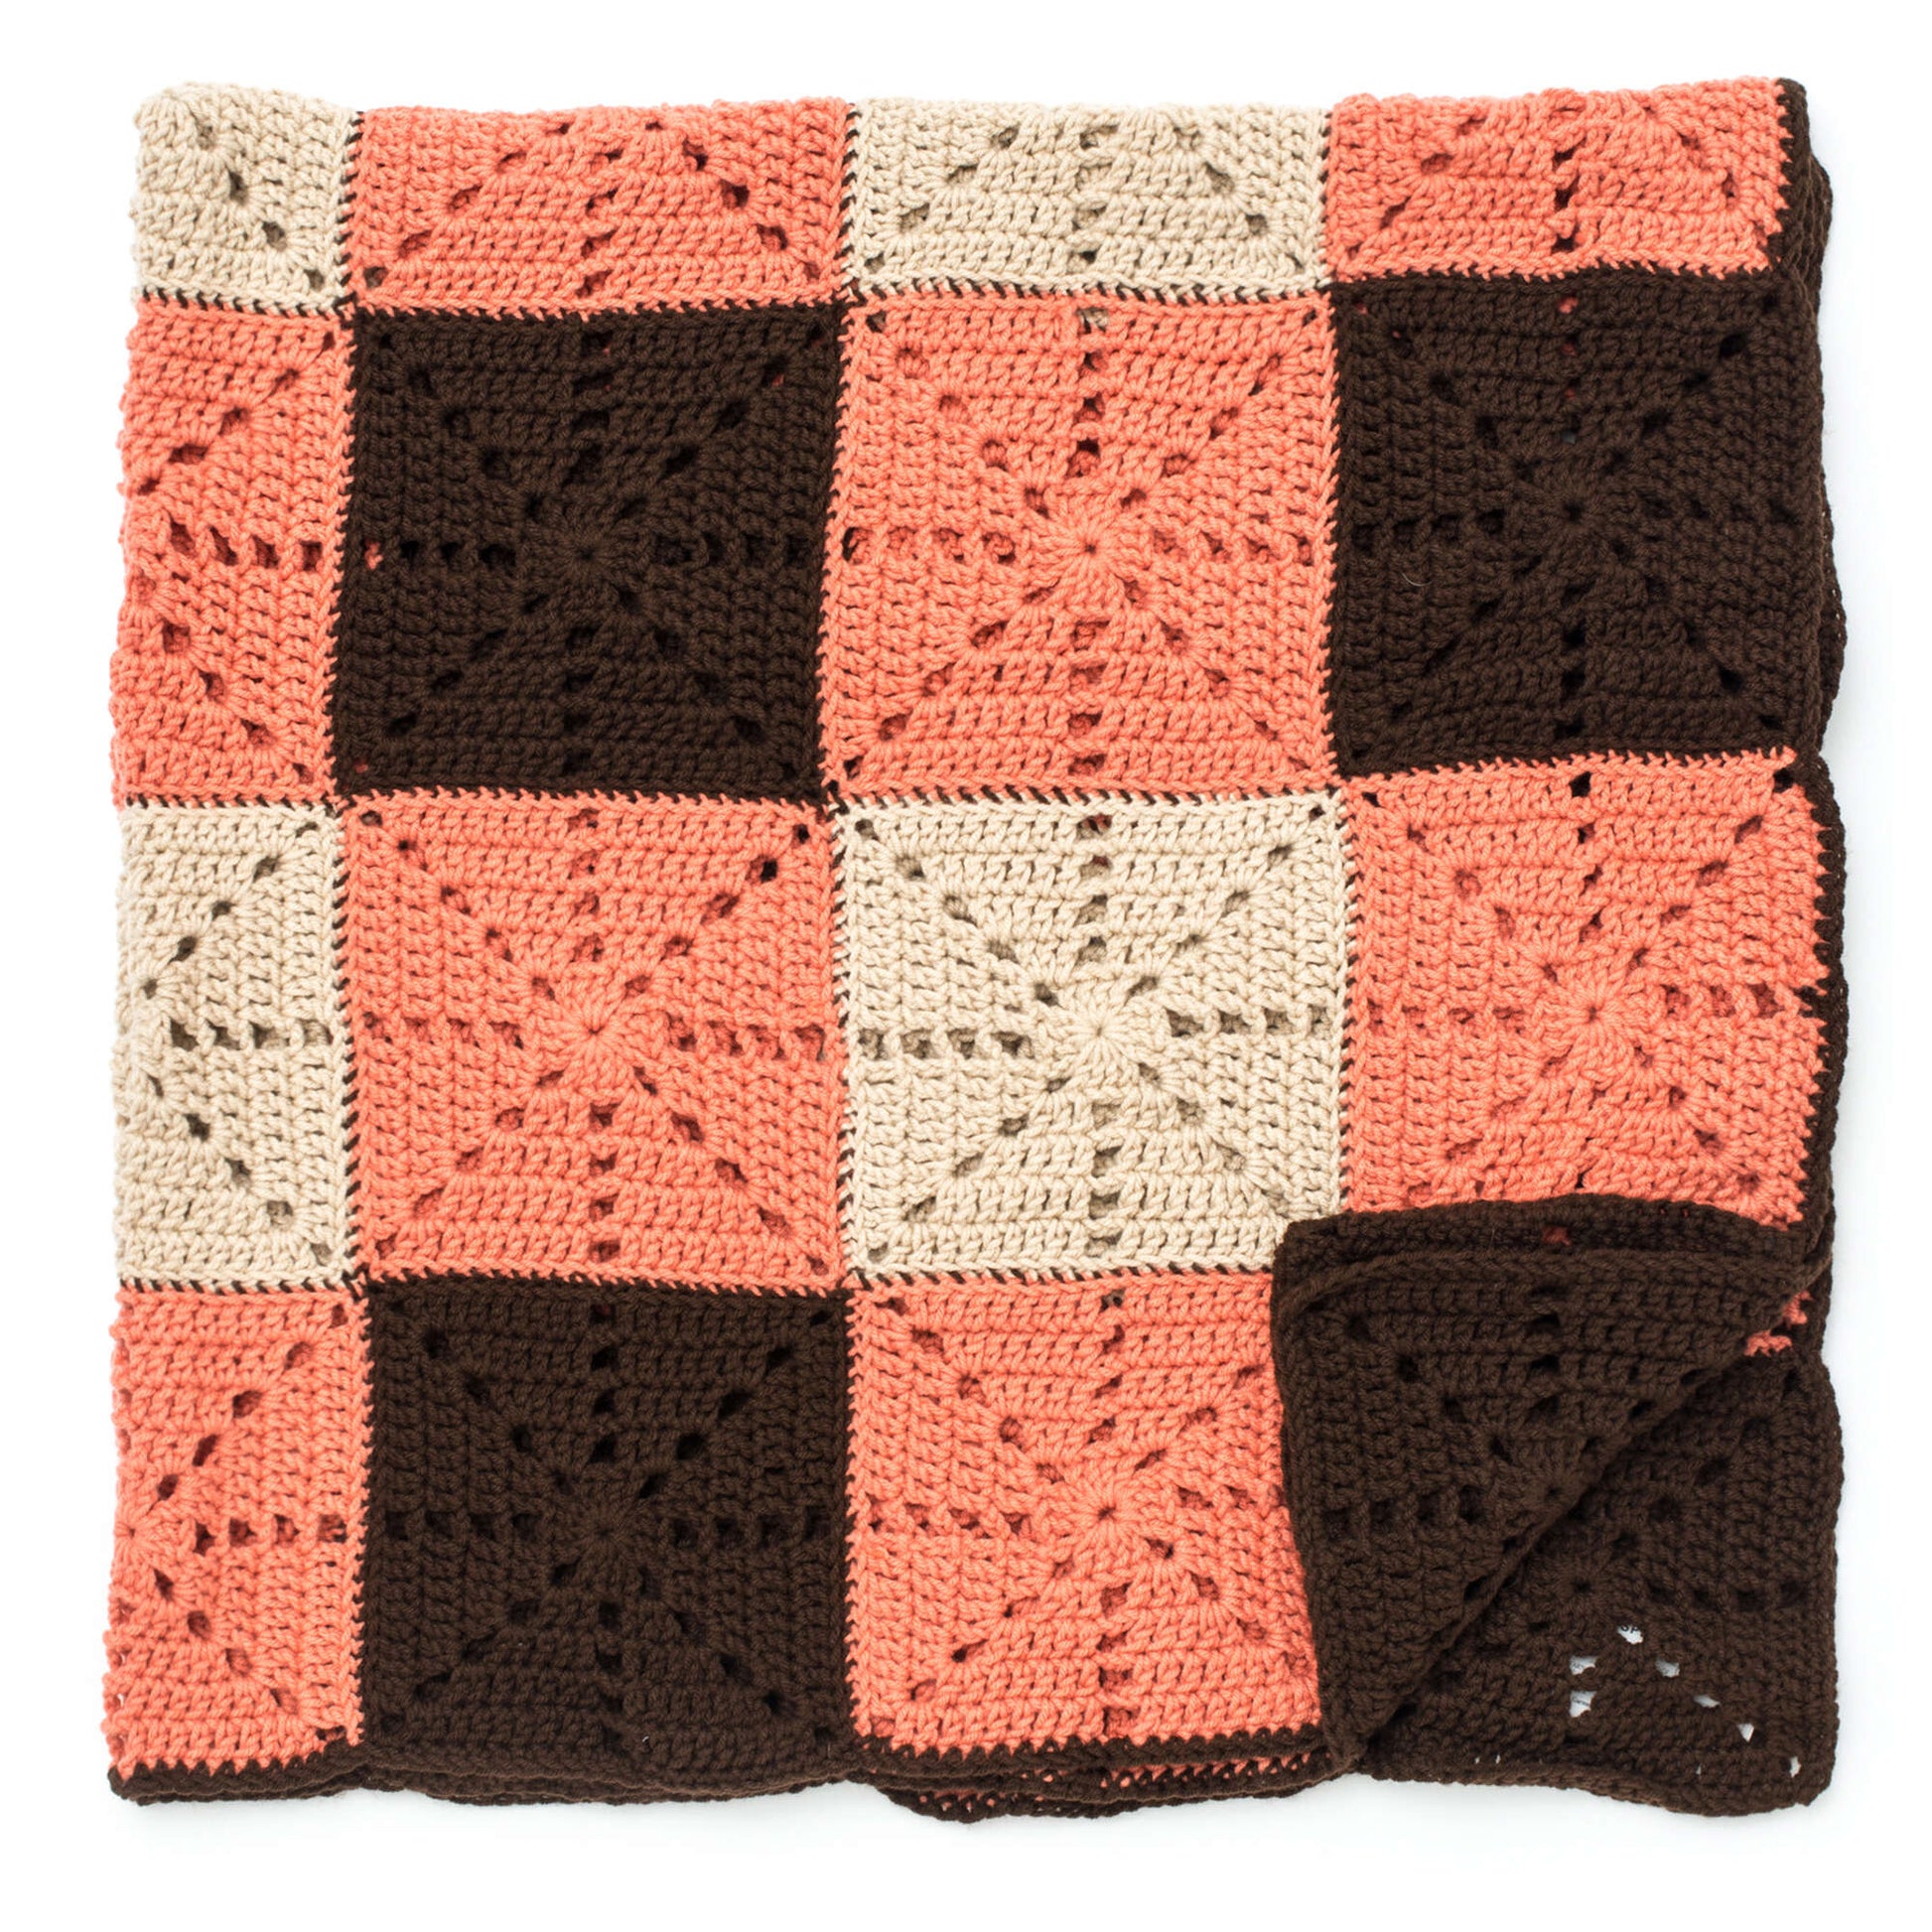 Free Caron Square Dance Crochet Blanket Pattern